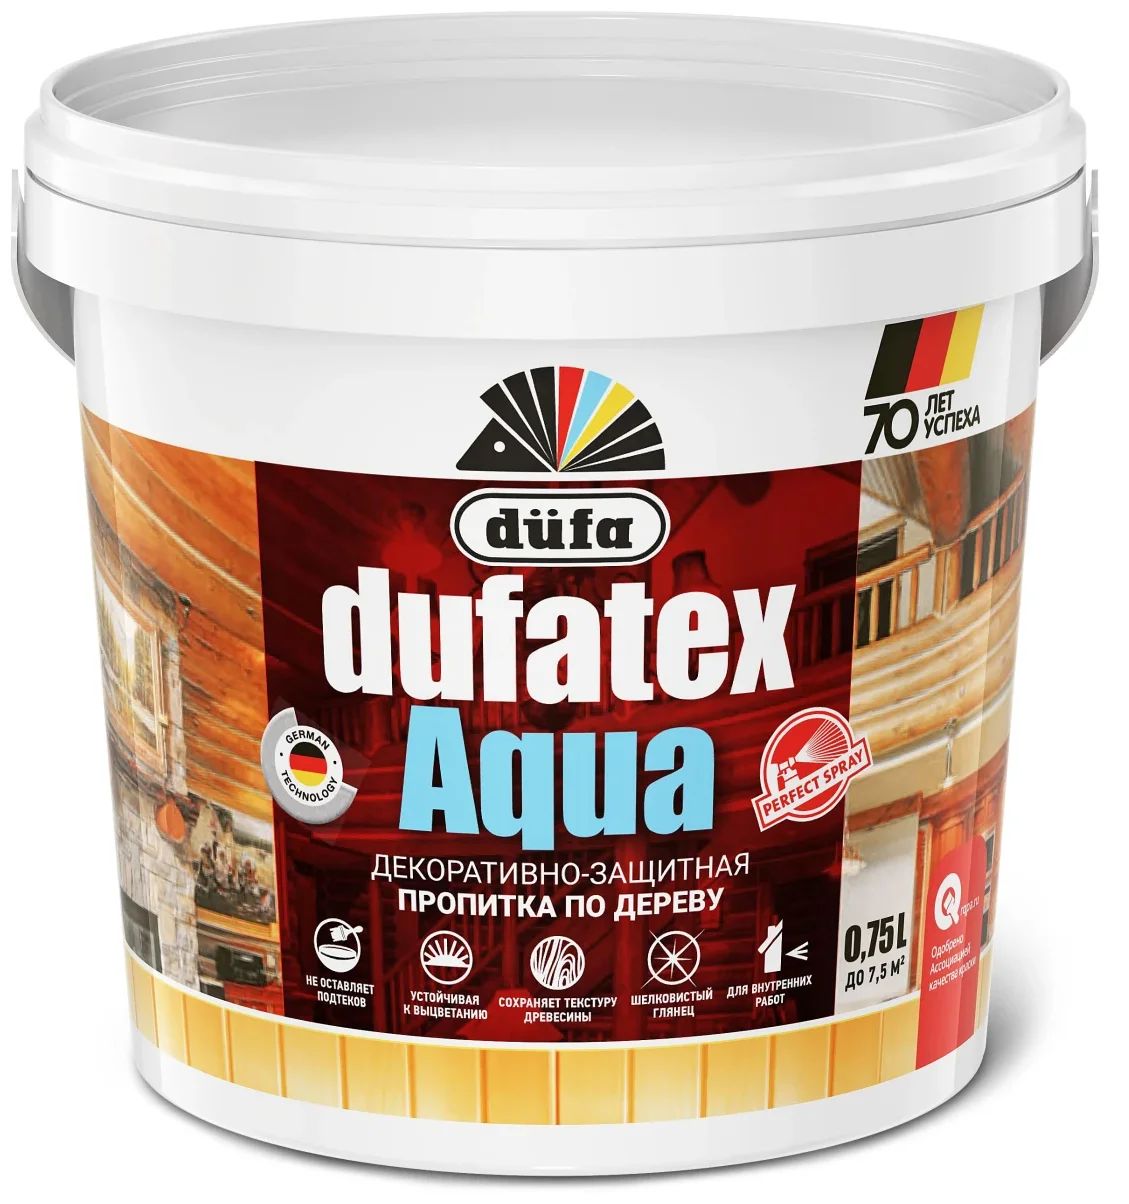 Пропитка для древесины Dufa Dufatex-Aqua бесцветная, 750 мл